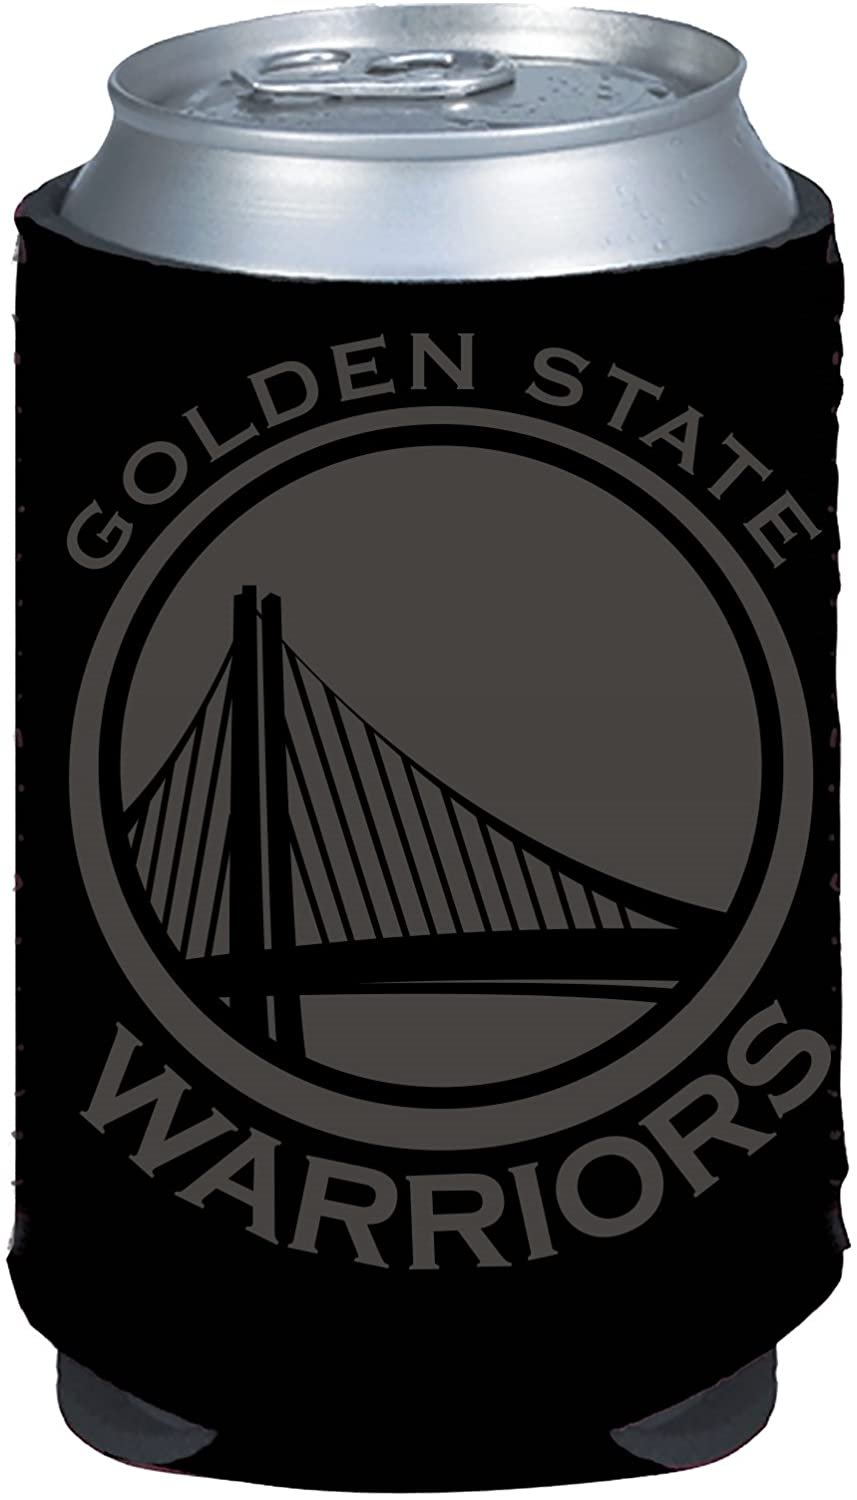 Golden State Warriors 2-Pack Black Tonal CAN Beverage Insulator Neoprene Holder Cooler Decal Basketball